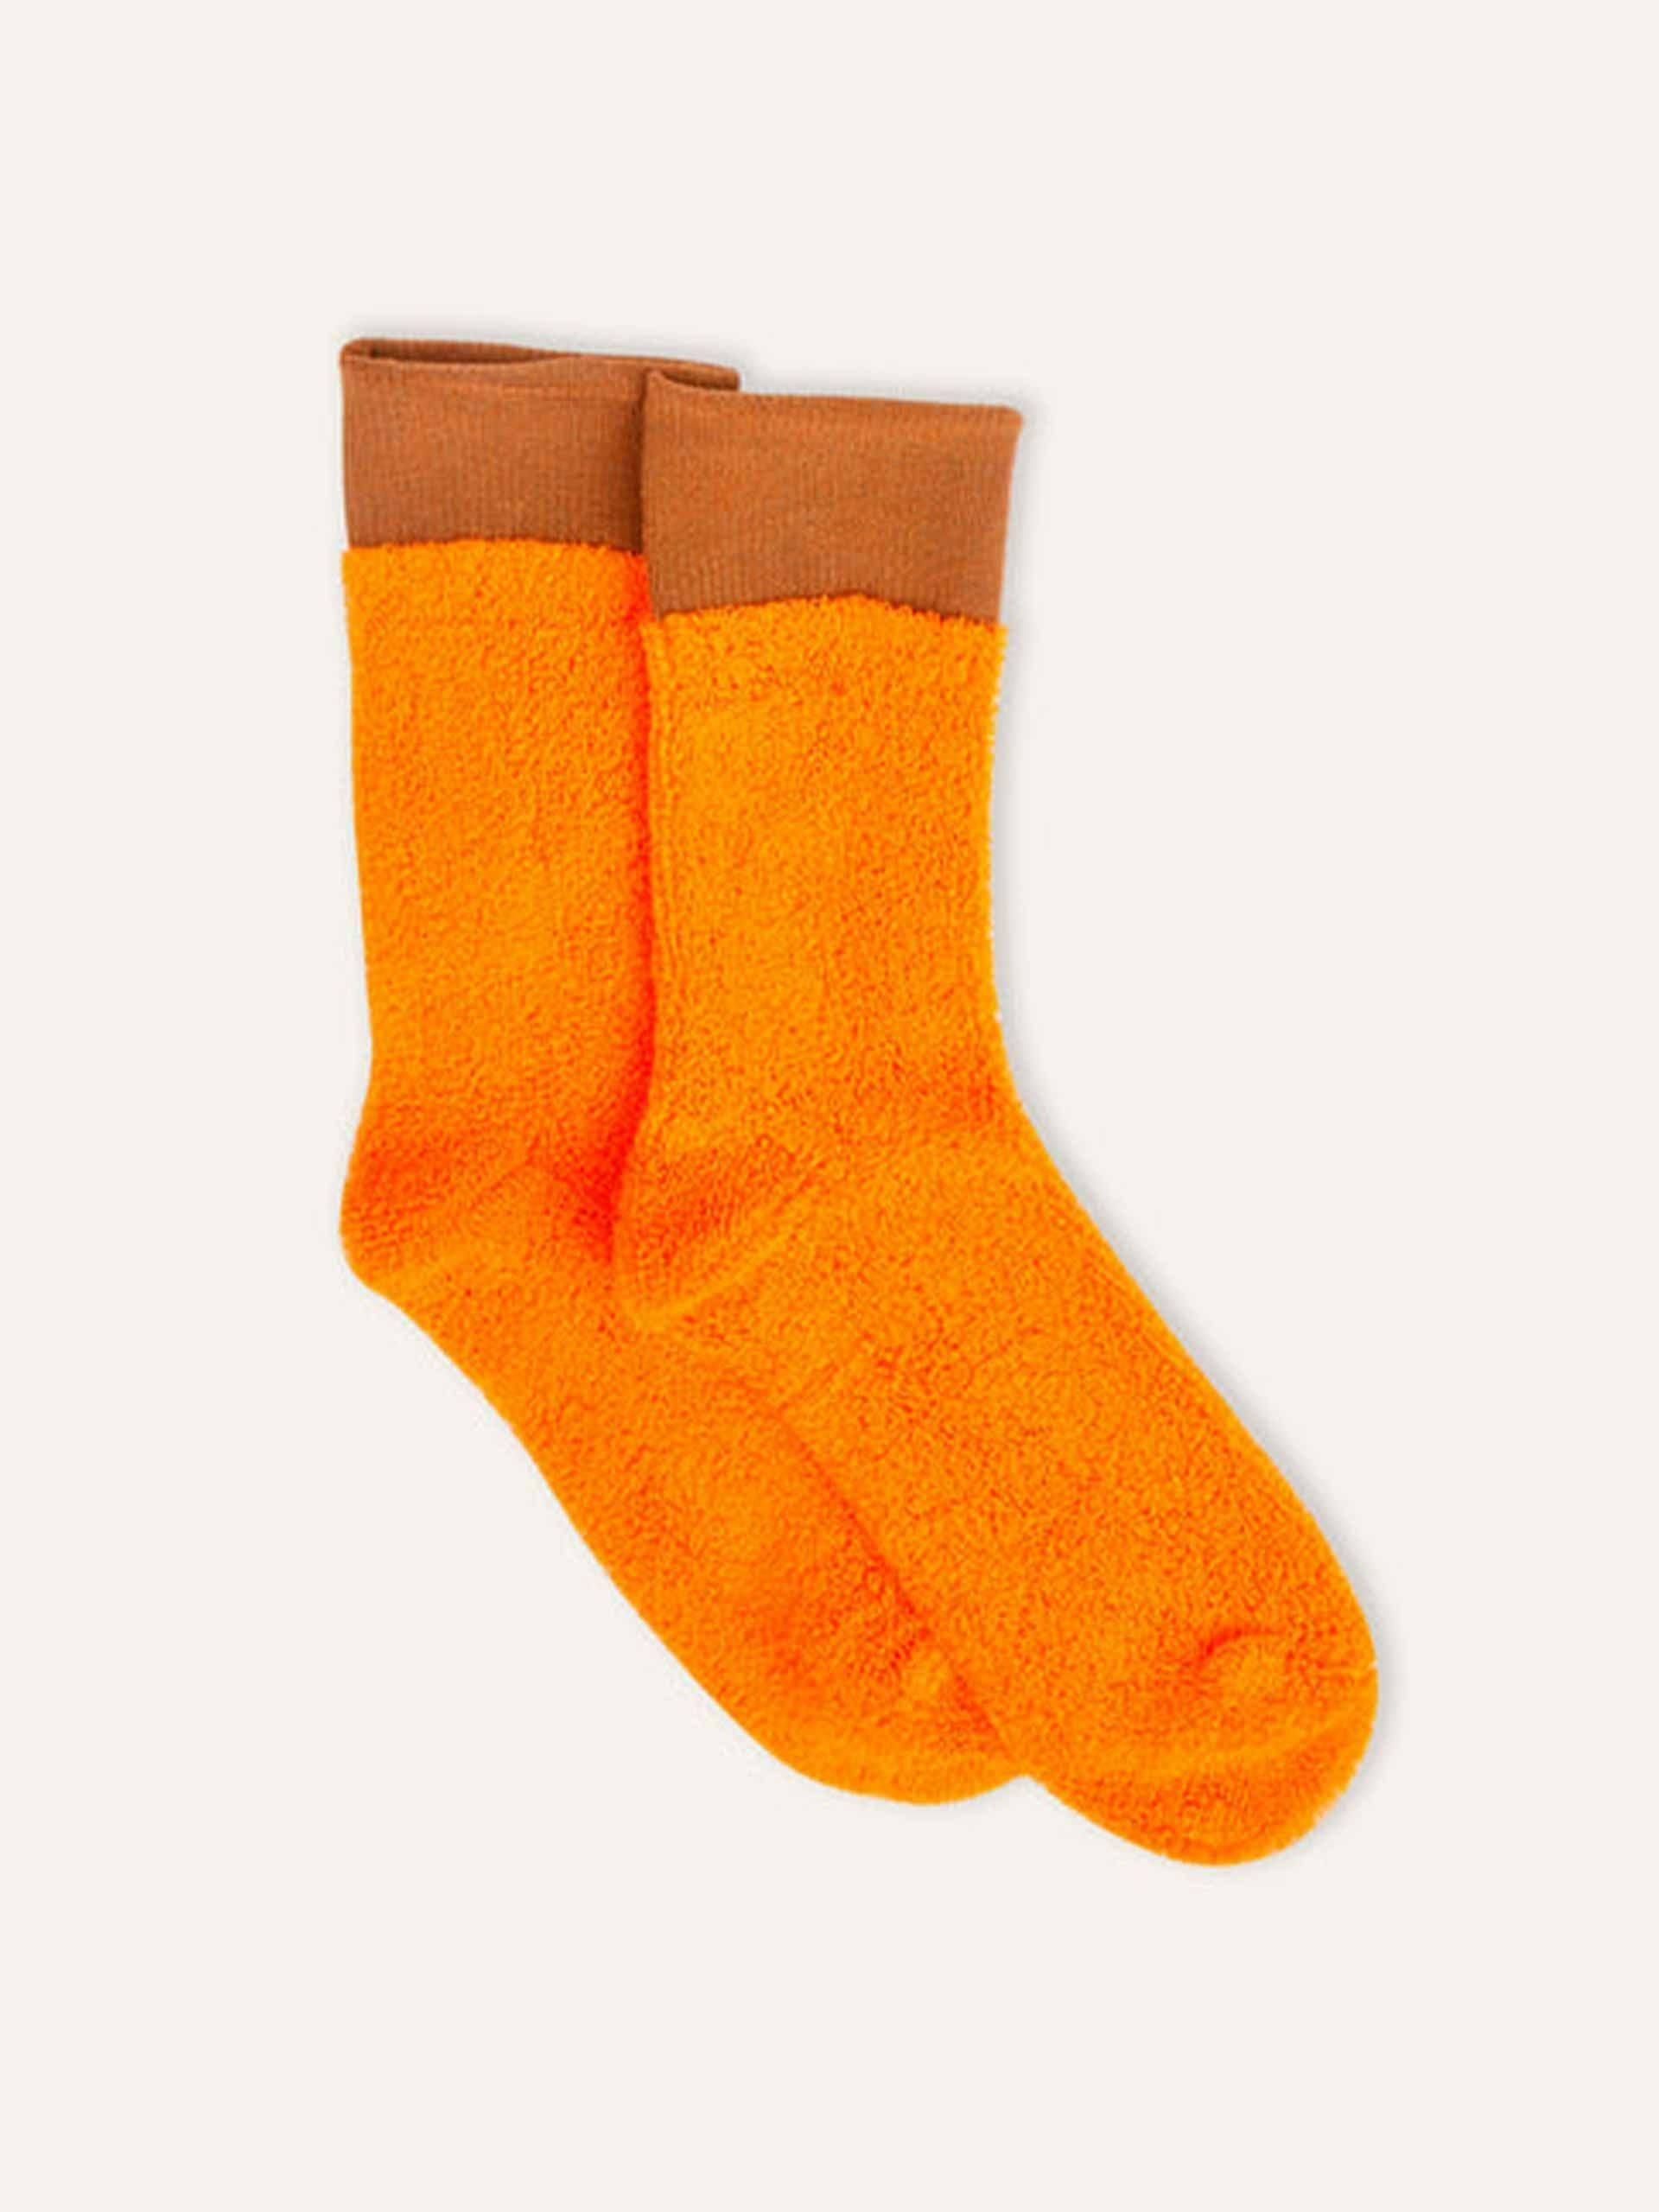 Sporty socks